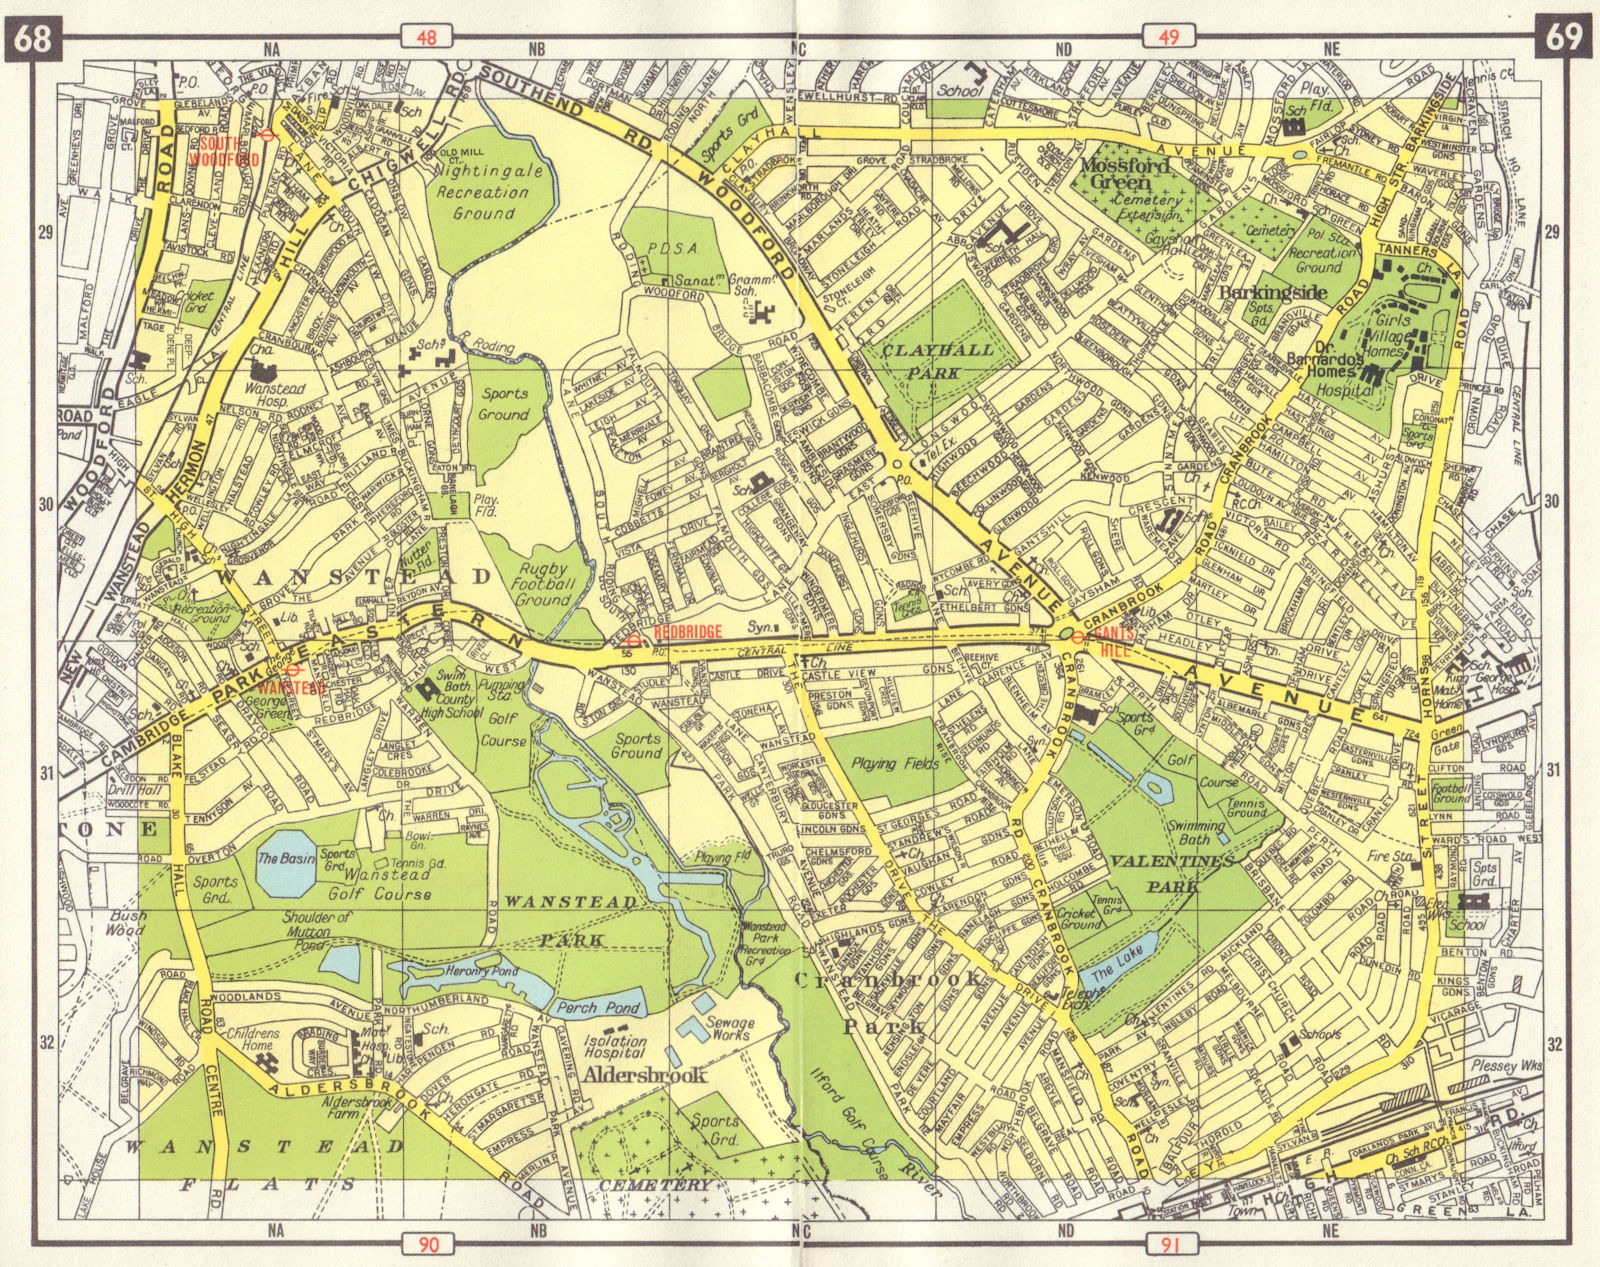 NE LONDON Wanstead Mossford Green Cranbrook Park Barkingside Woodford 1965 map